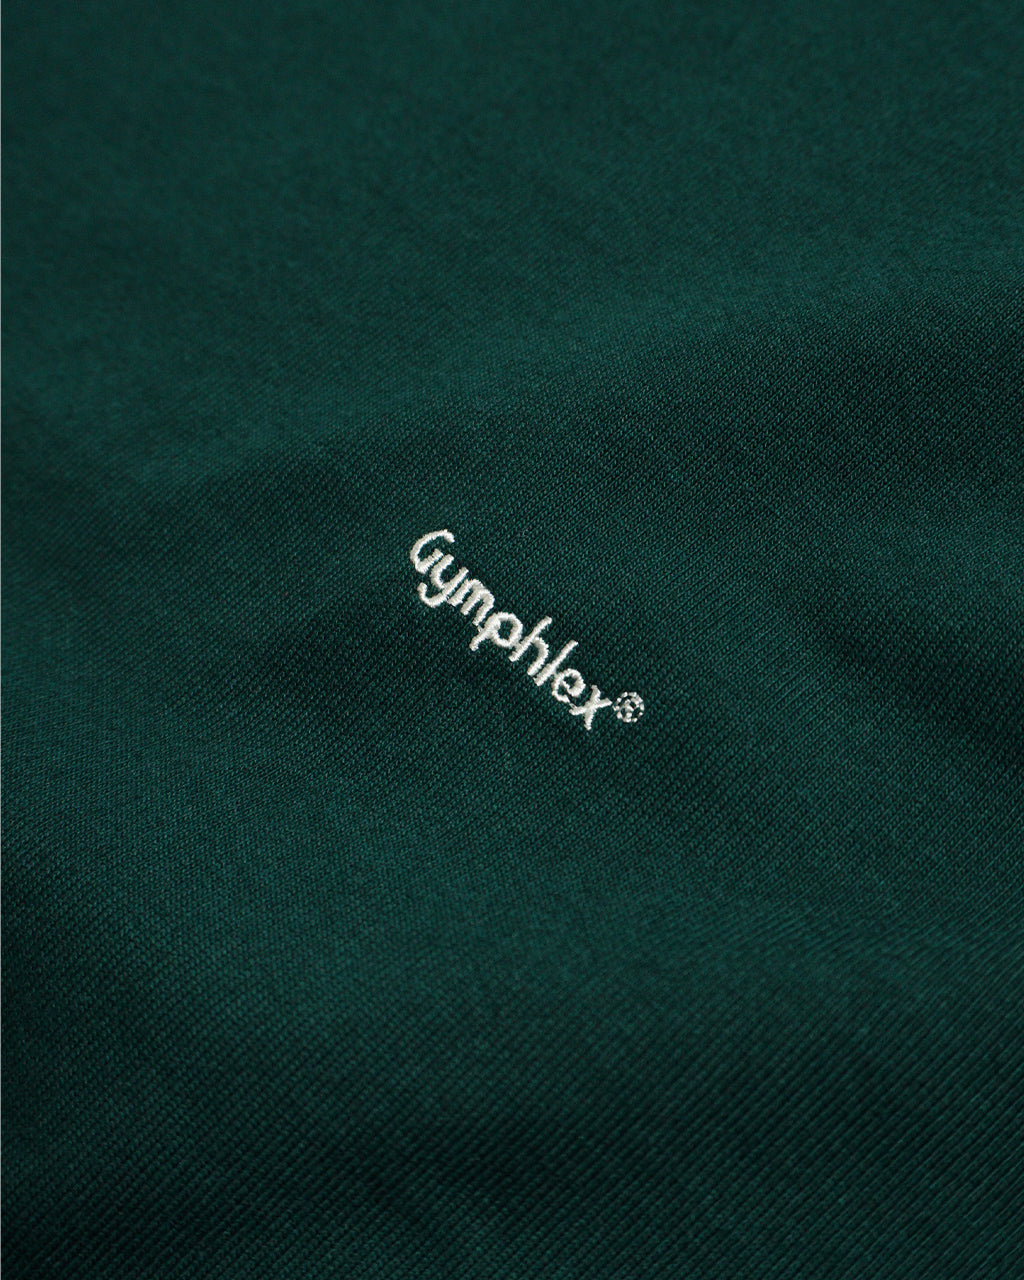 Gymphlex ジムフレックス クルーネック ショートスリーブ Tシャツ CREW NECK S/S T-SHIRTS 半袖 カットソー J-9271HWJ